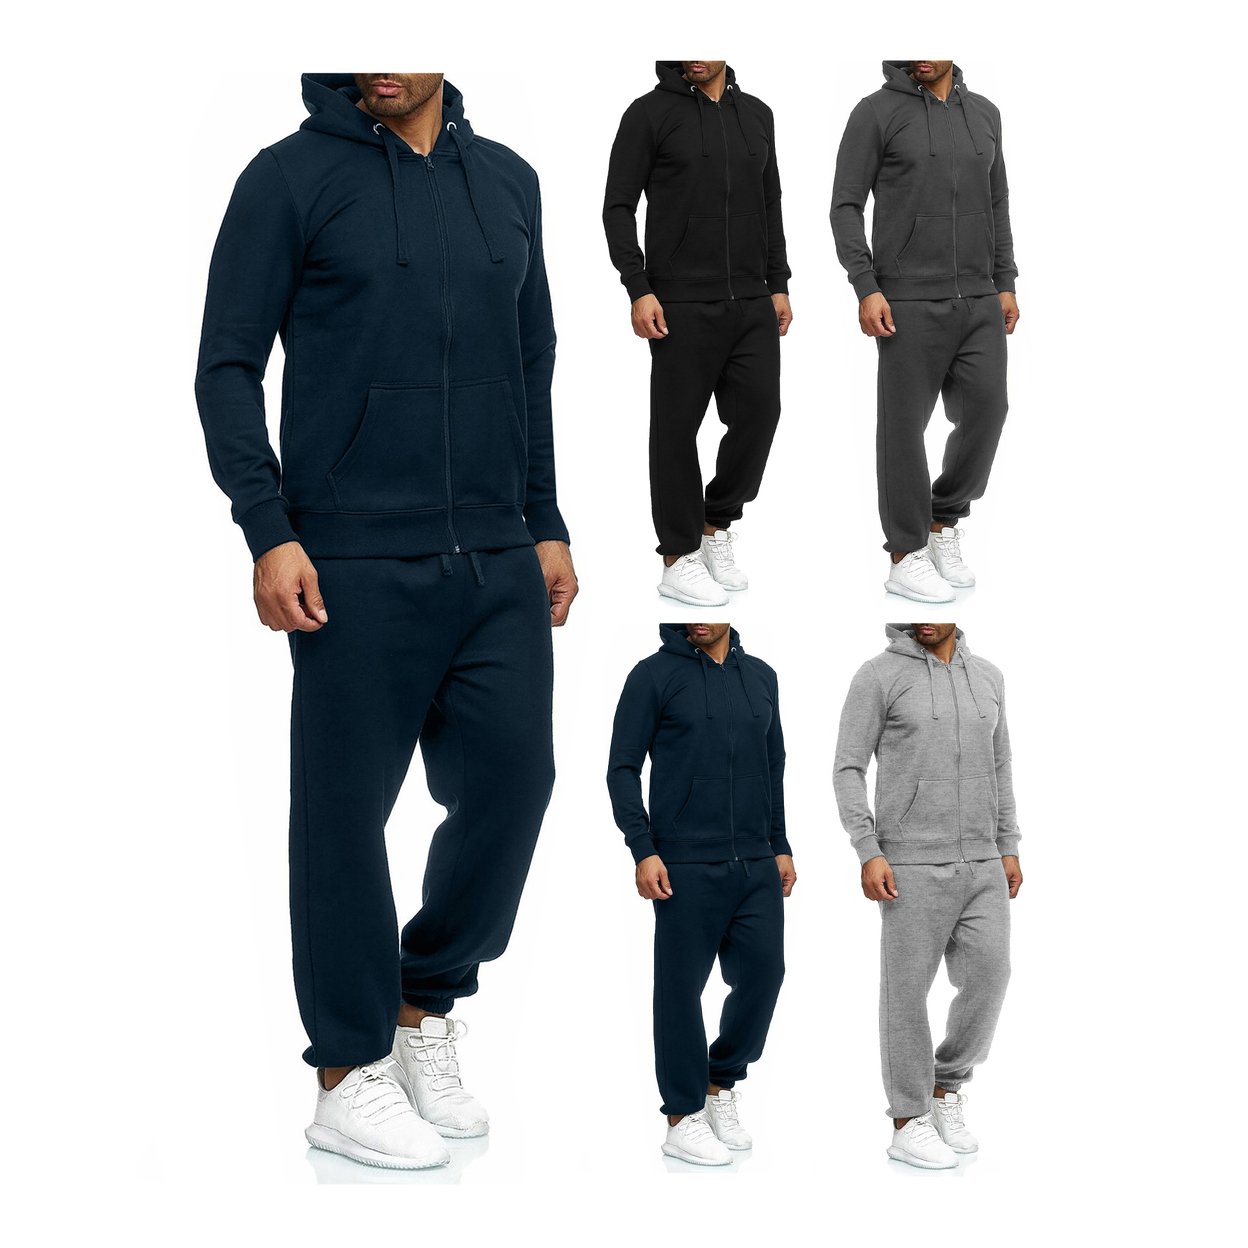 Men's Casual Big & Tall Athletic Active Winter Warm Fleece Lined Full Zip Tracksuit Jogger Set - Grey, Medium